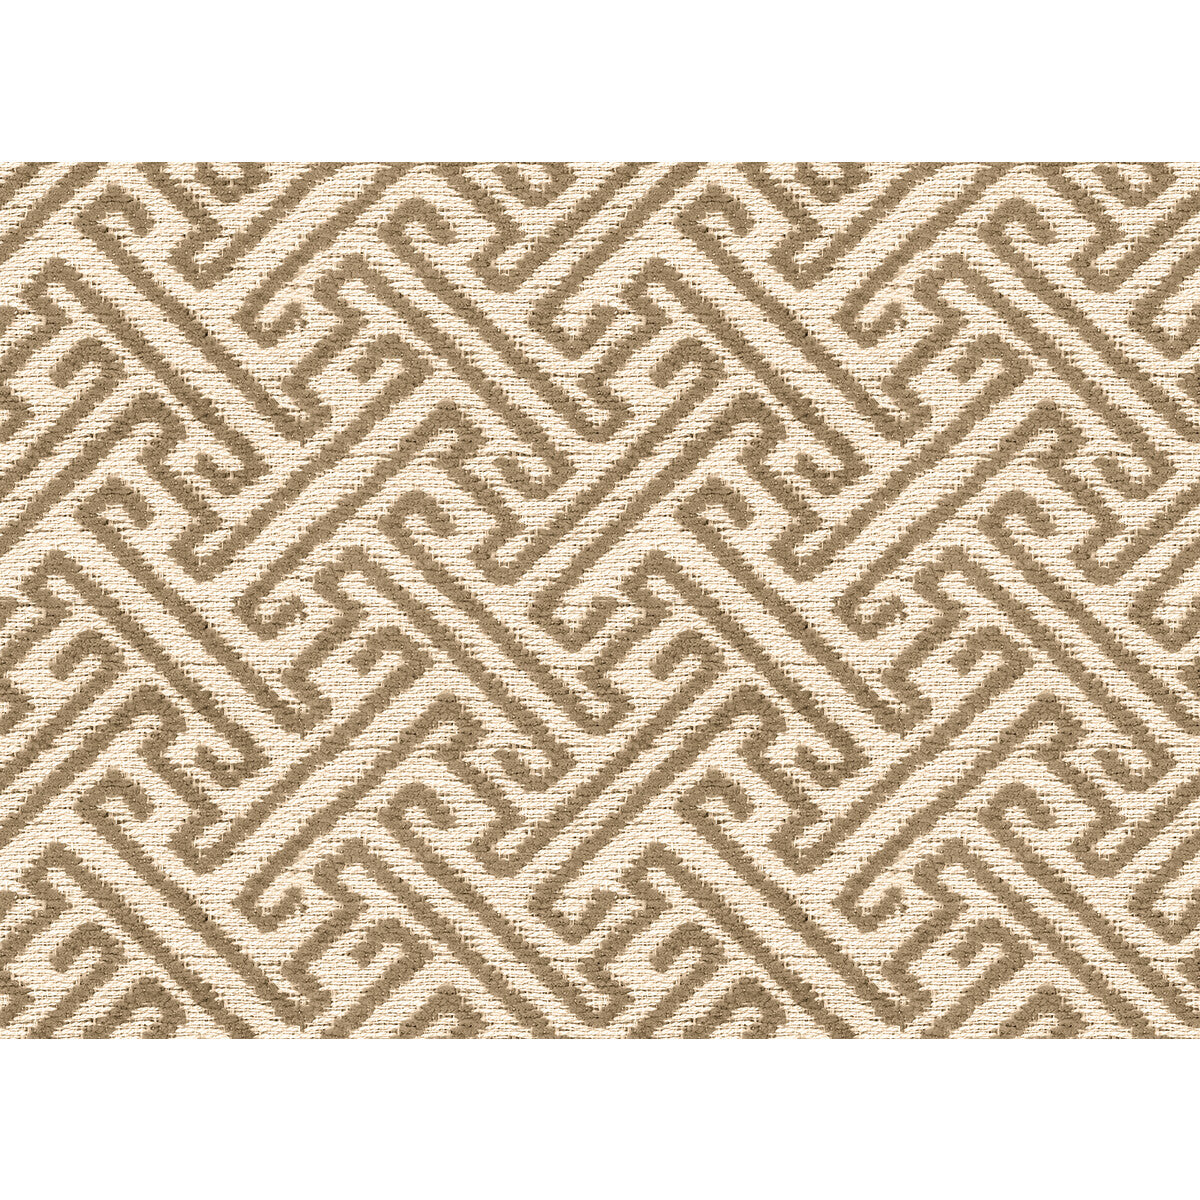 Kravet Smart fabric in 30698-1611 color - pattern 30698.1611.0 - by Kravet Smart